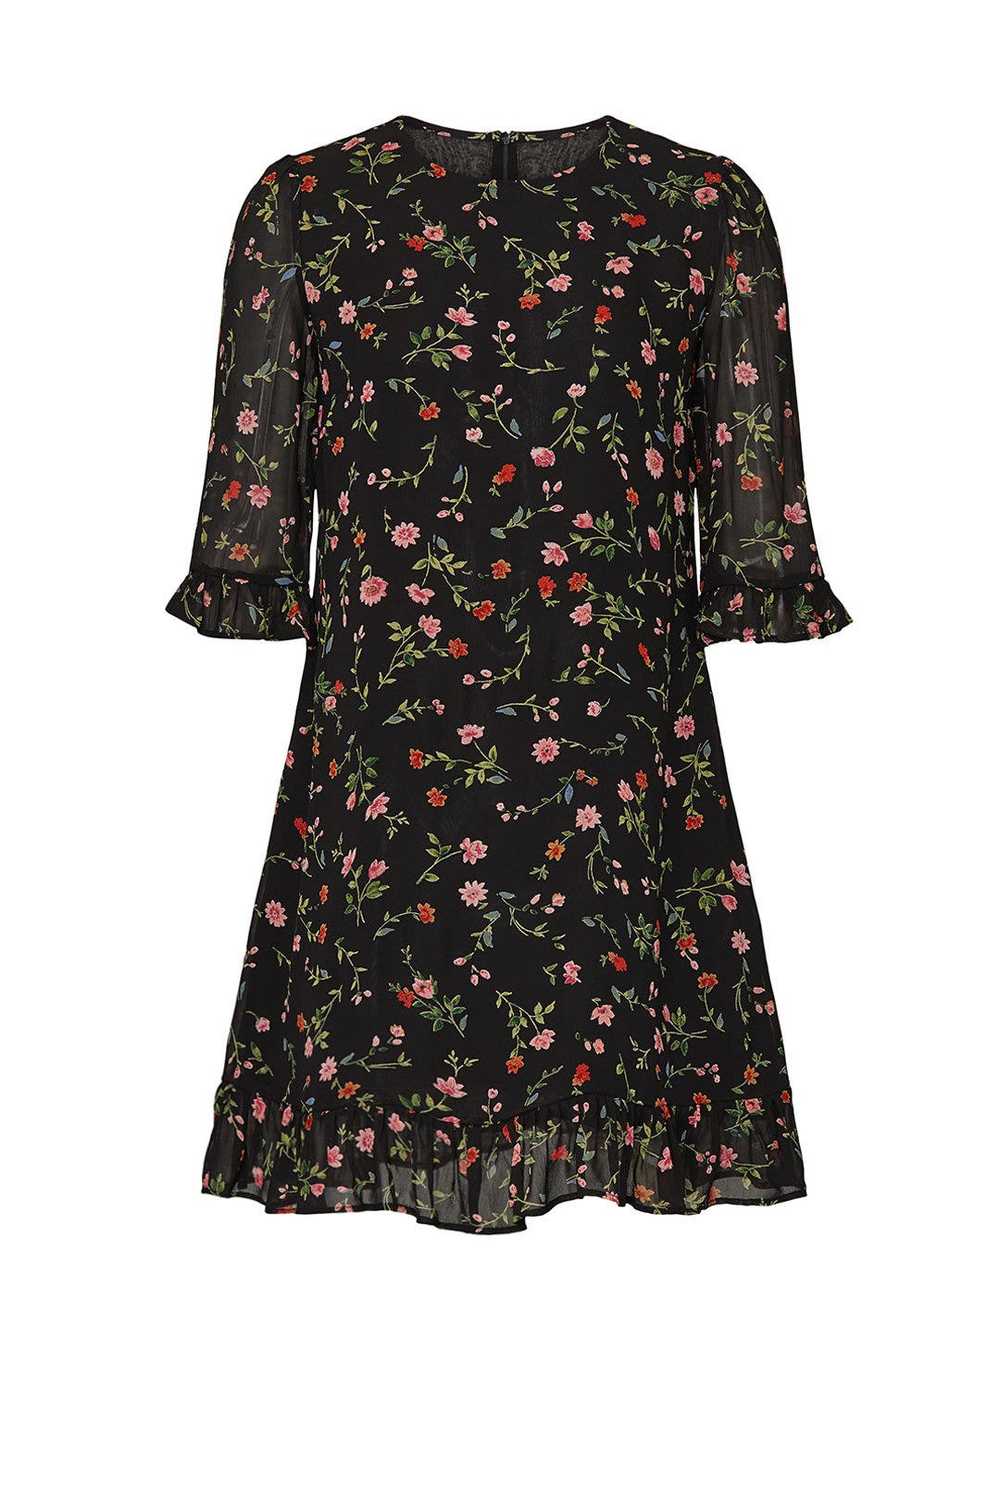 GANNI Black Floral Mini Dress - image 5